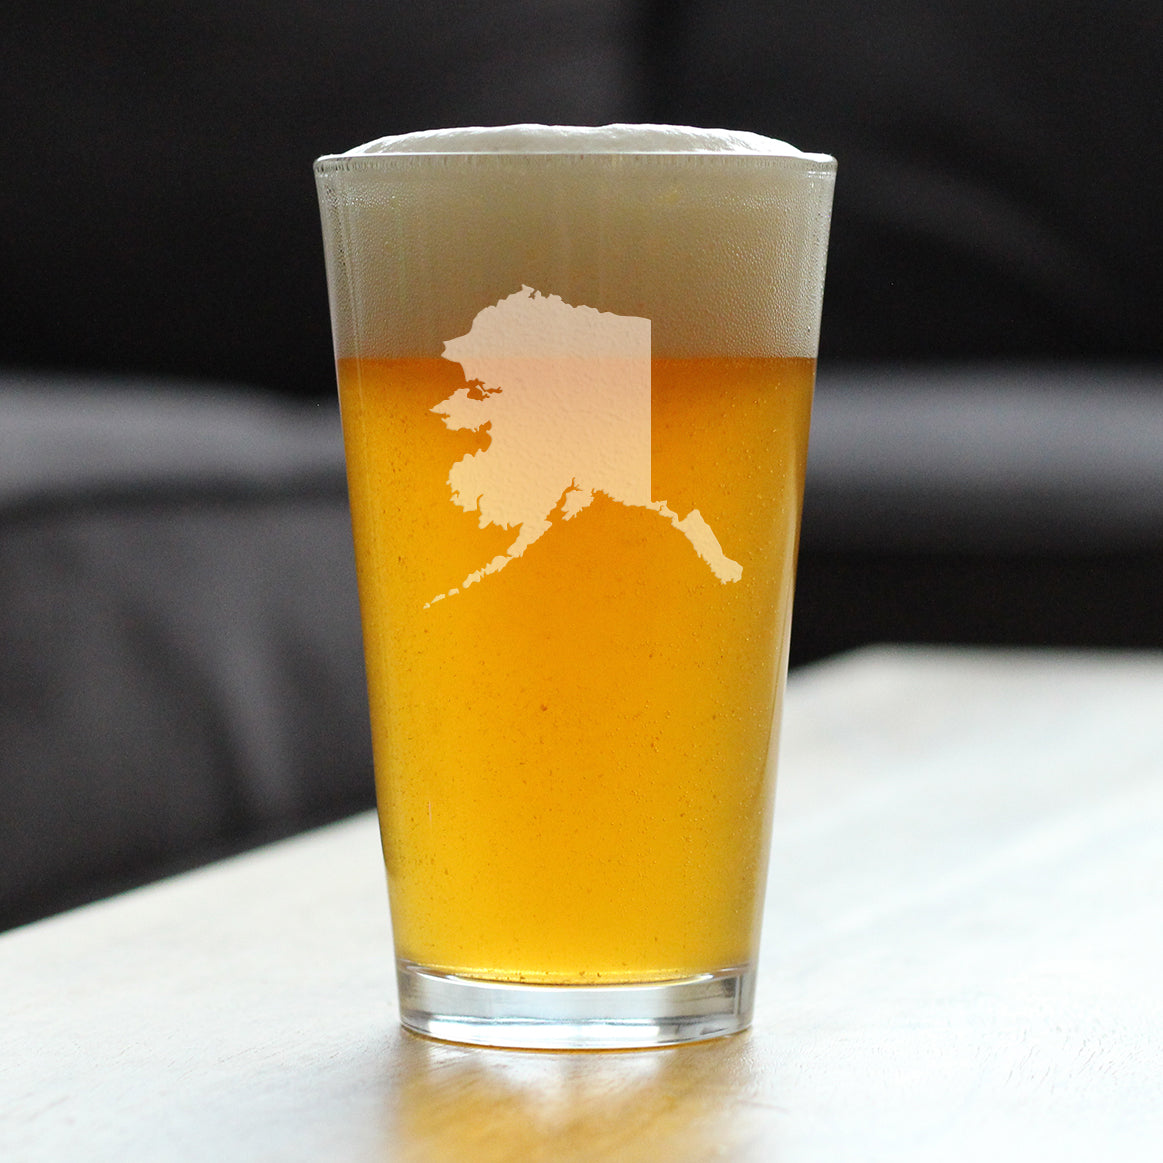 Alaska State Outline Pint Glass for Beer - State Themed Drinking Decor and Gifts for Alaskan Women &amp; Men - 16 Oz Glasses